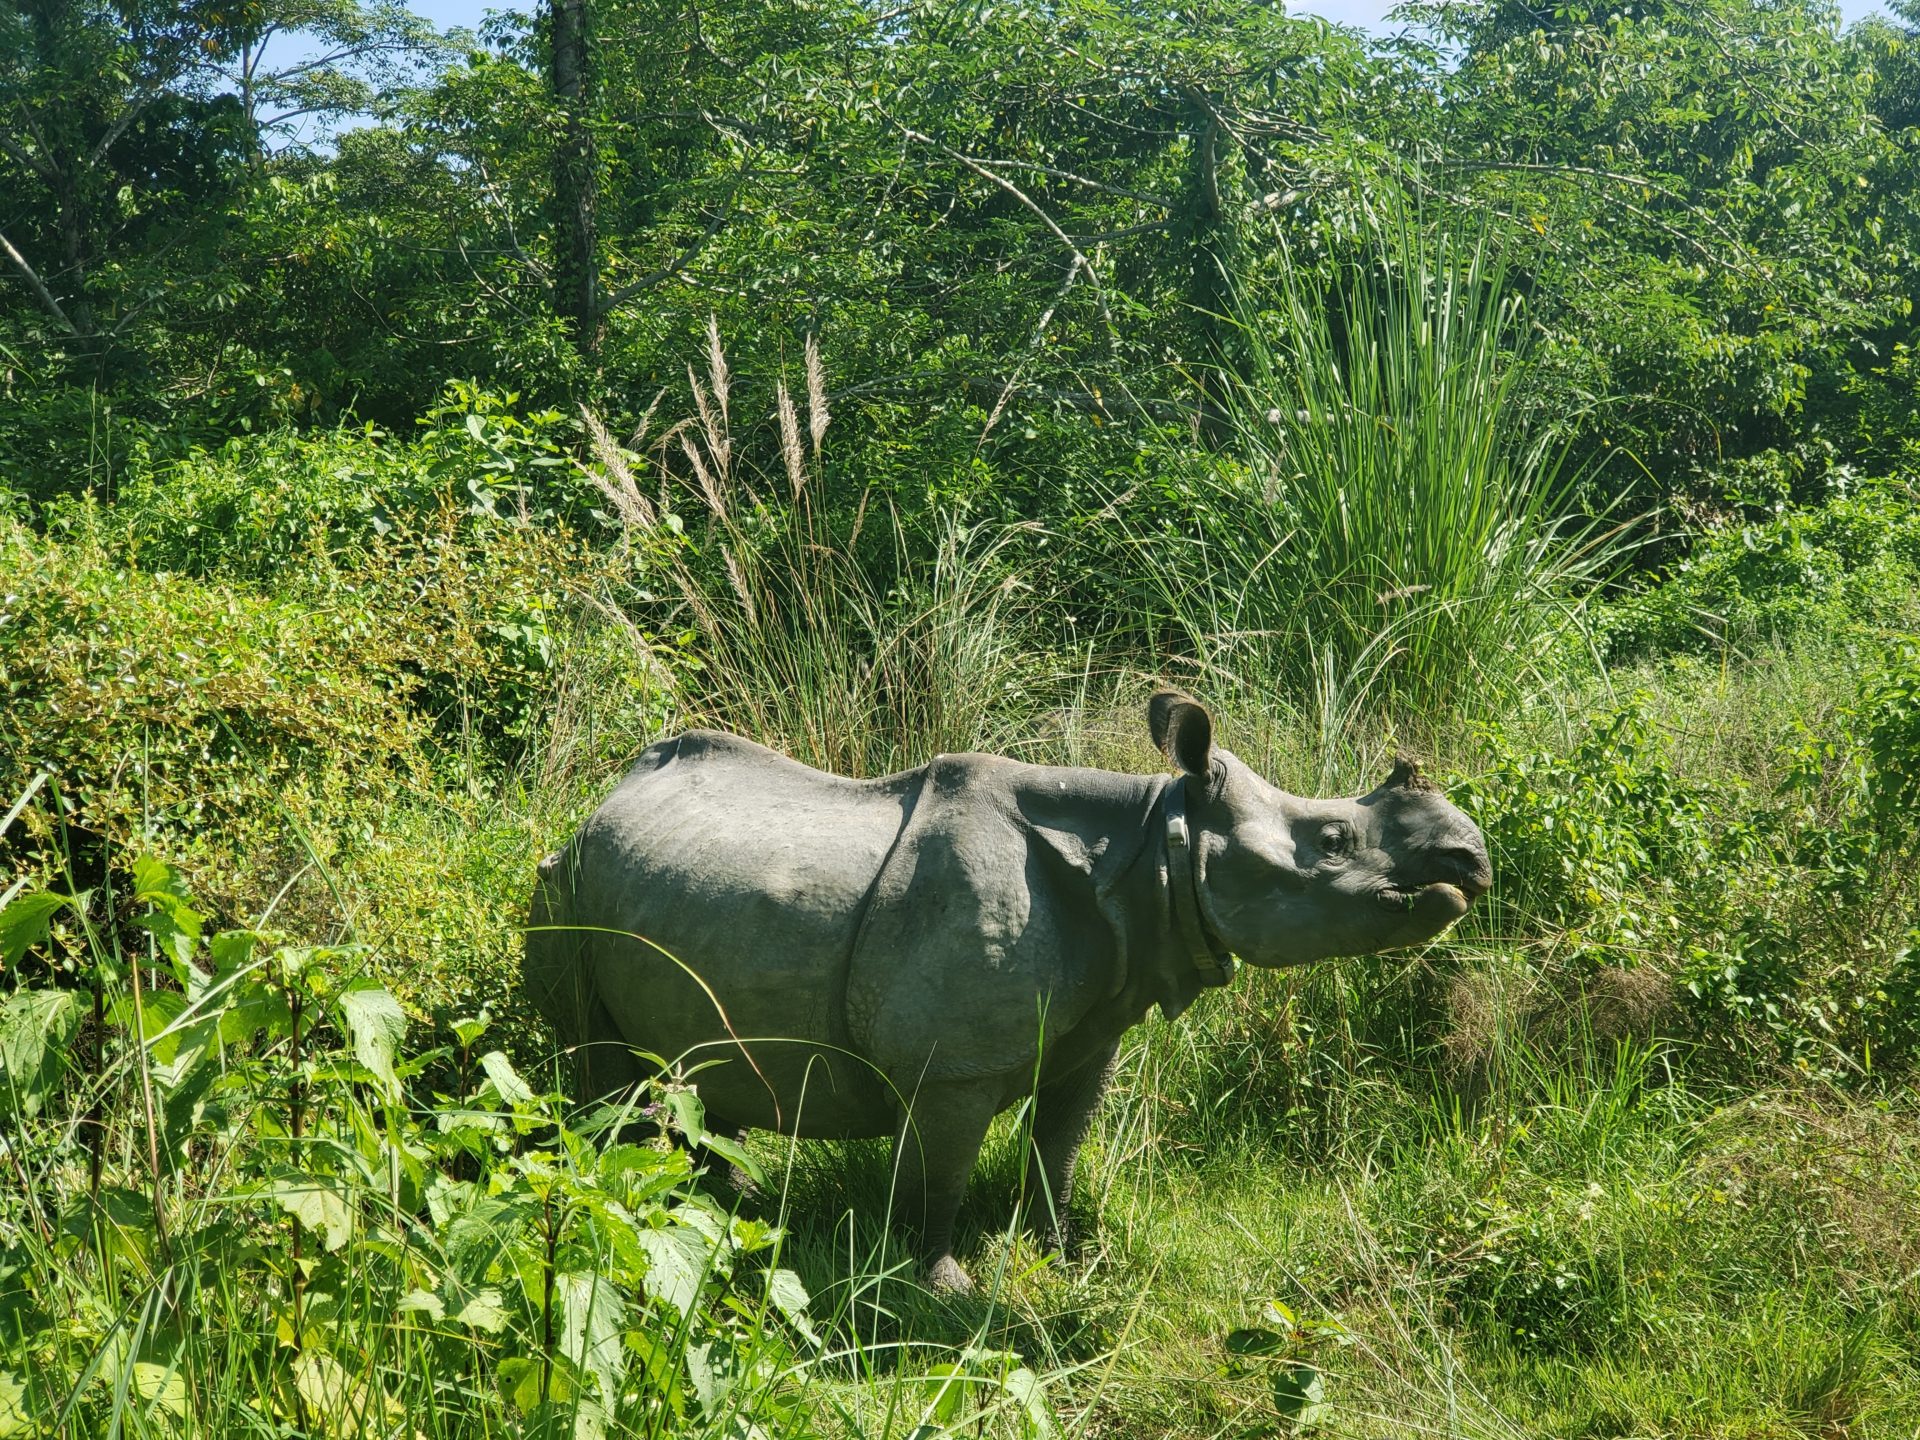 a rhino standing in a grassy area